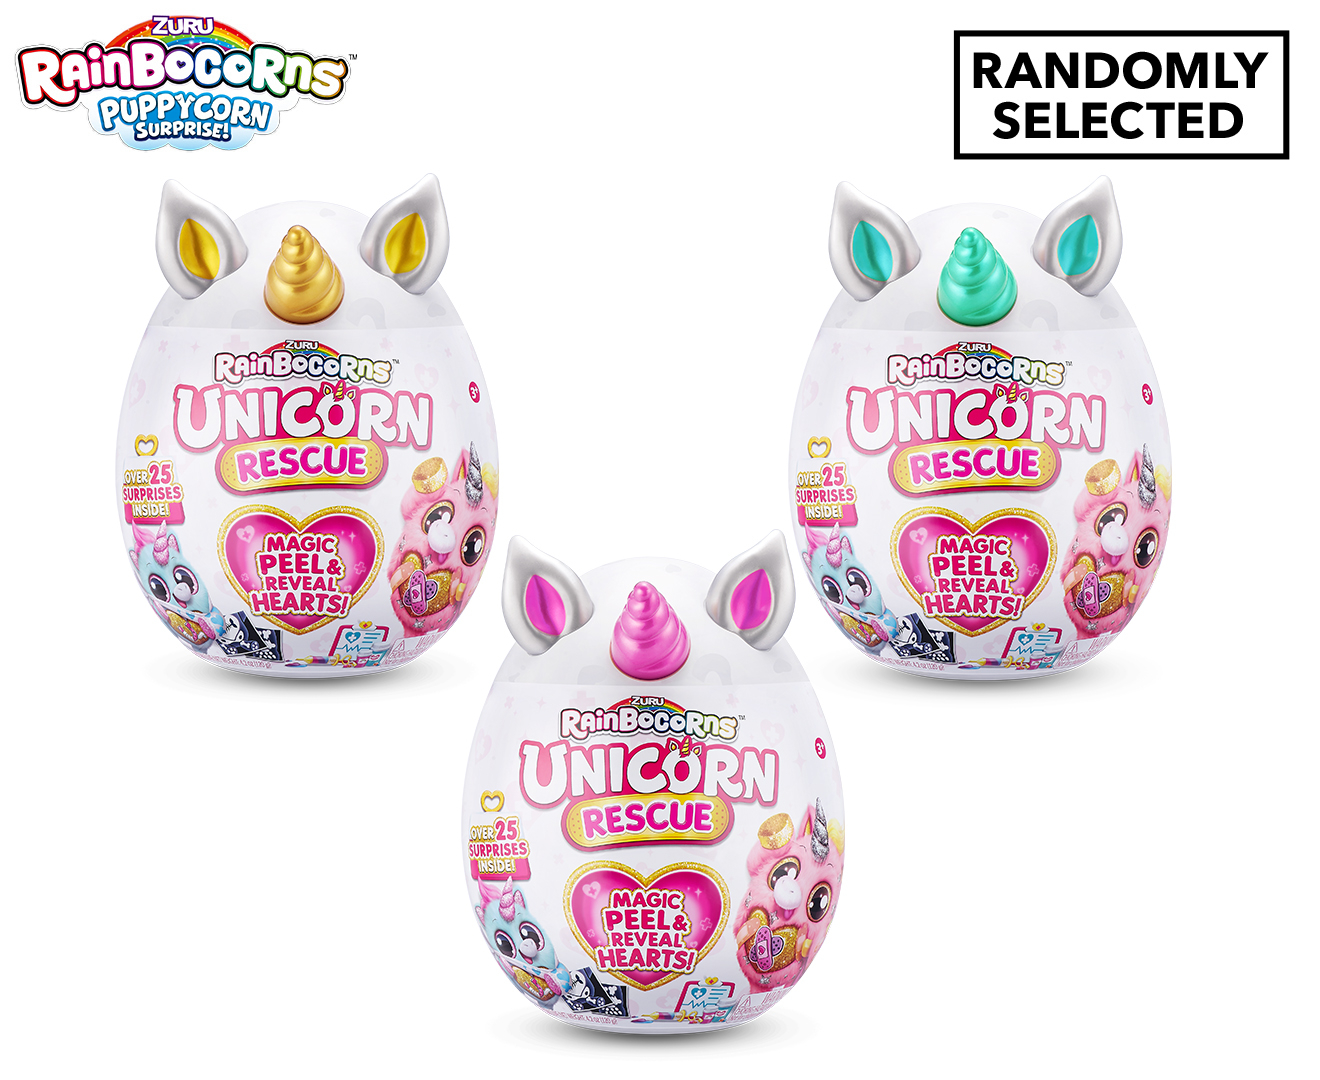 Rainbocorns Unicorn Rescue Surprise (White) by ZURU, Collectible Plush  Stuffed Animal, Egg Toys, X-Ray Sticker Pack, Magical Slime, Headband, Ages  3+